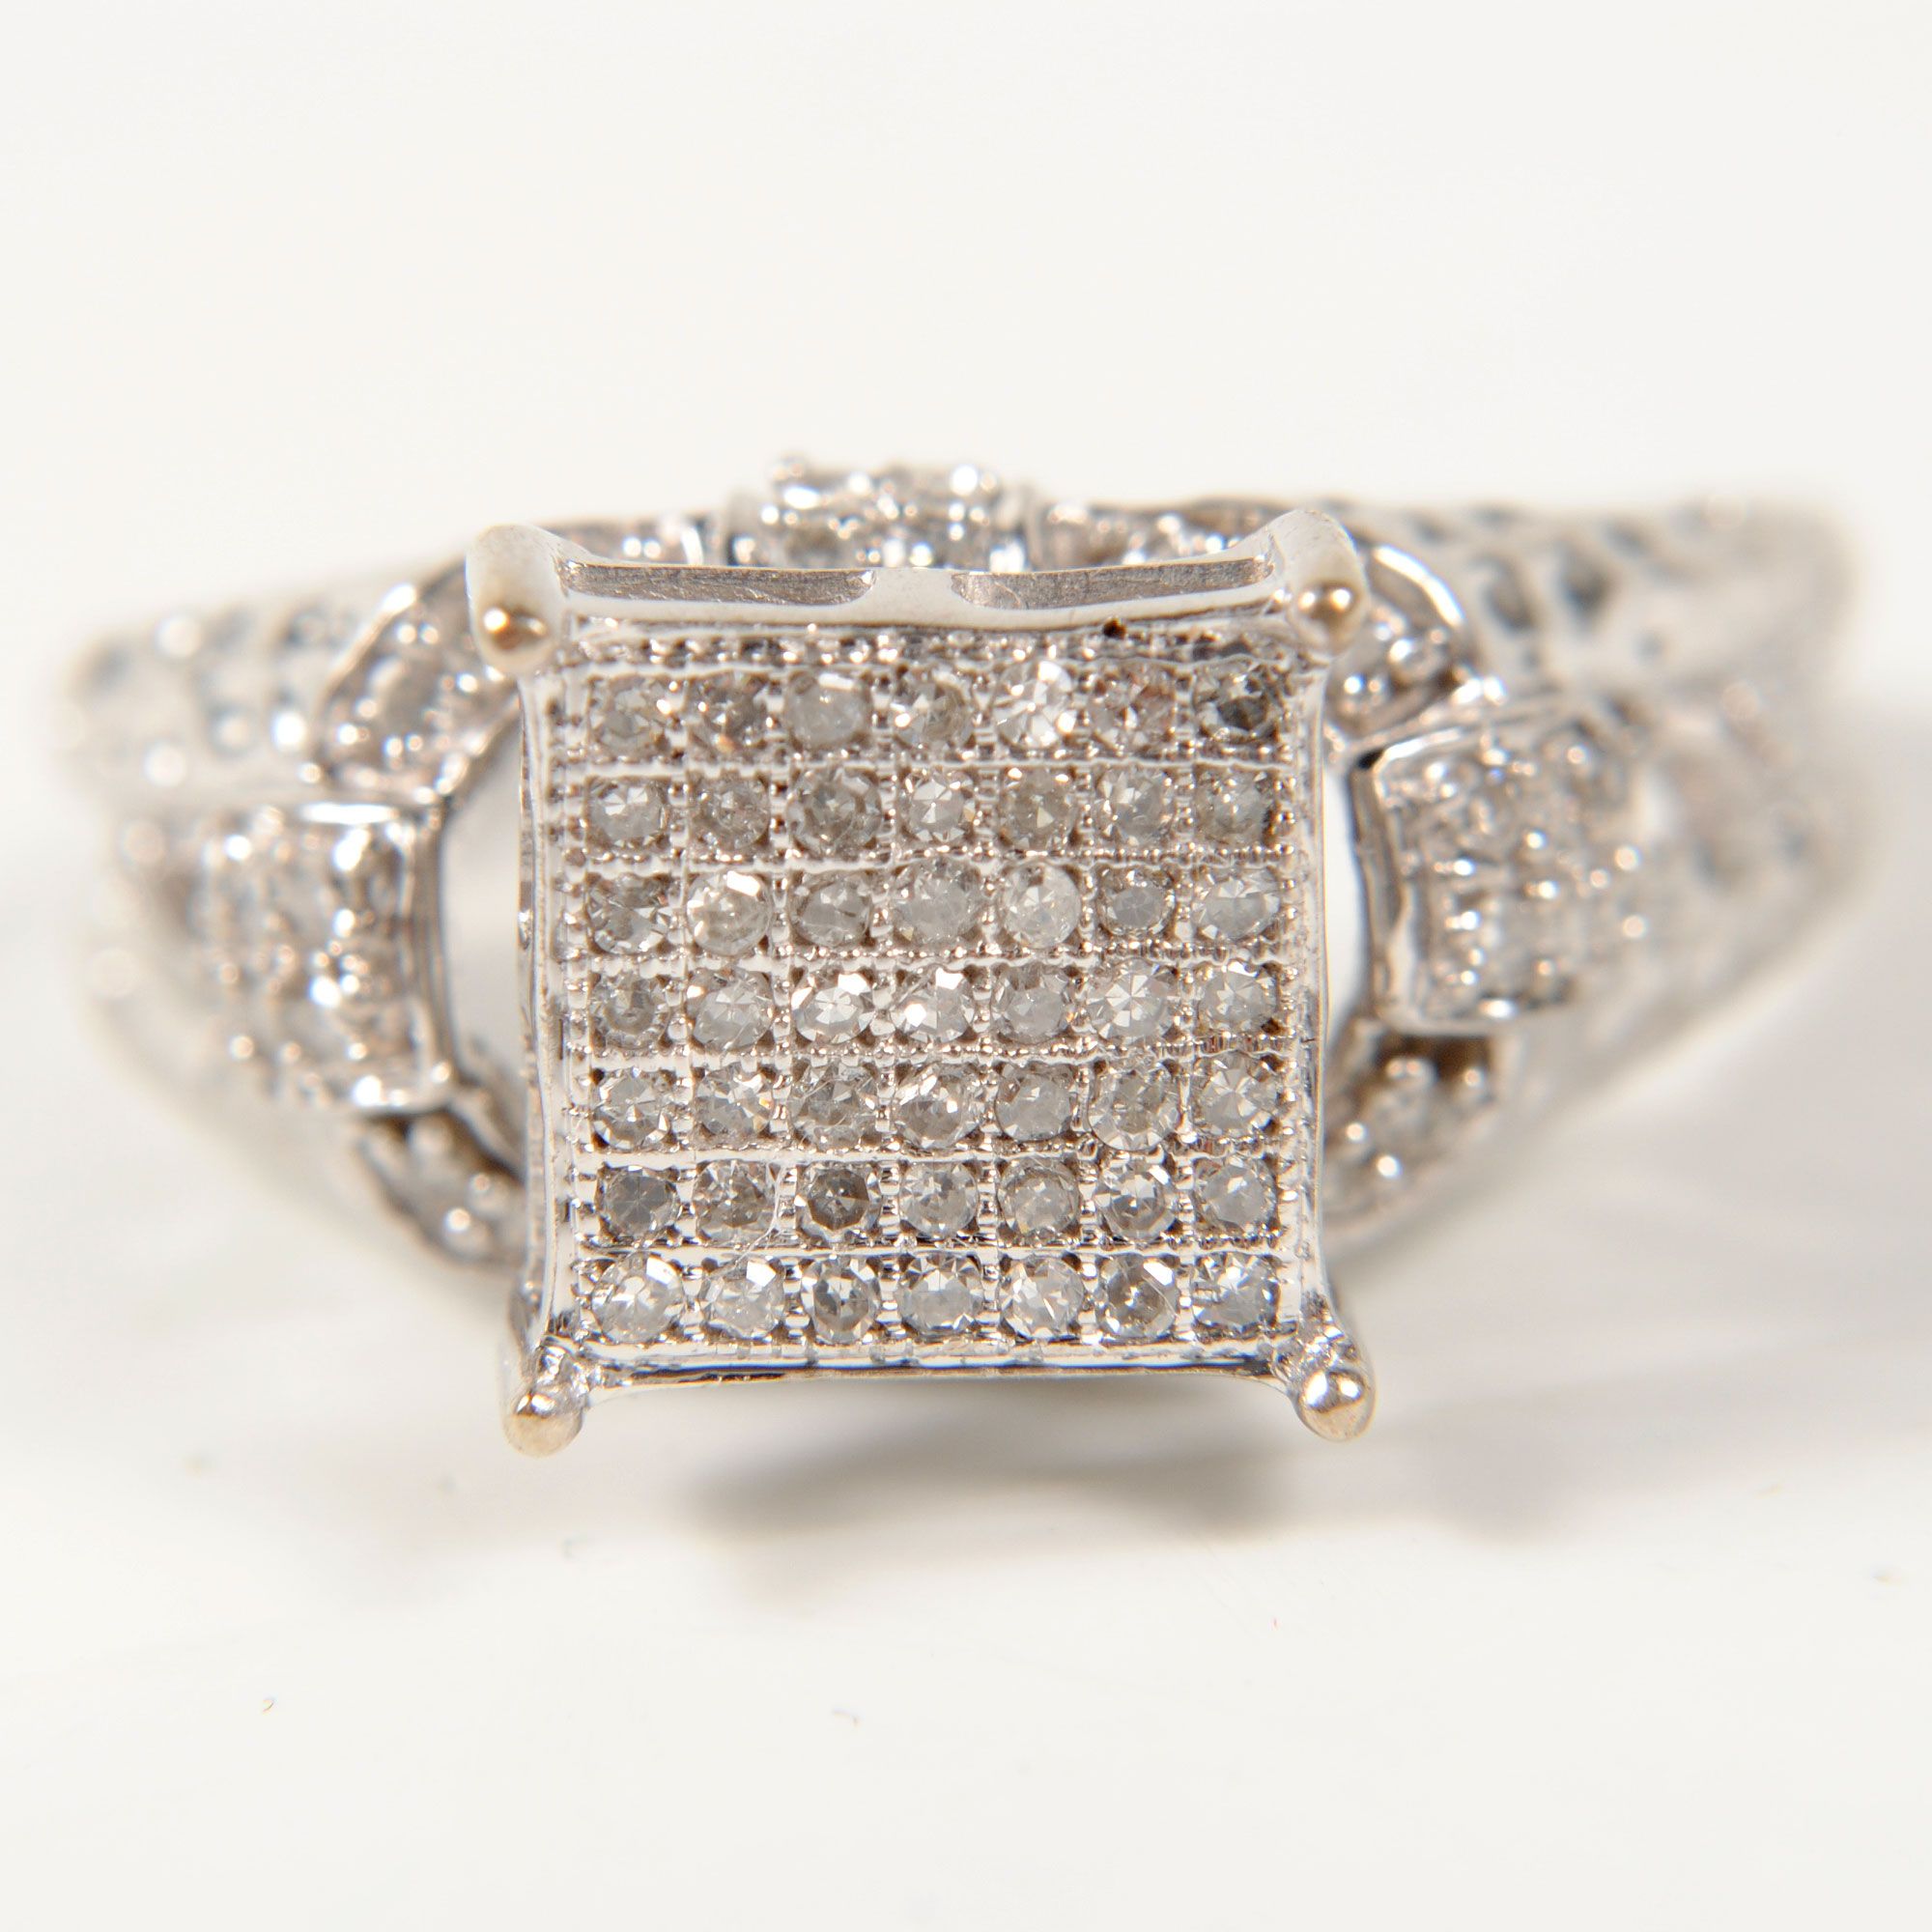 Ladies 10K White Gold Diamond Cluster Ring 1 3 cttw Size 7 ♥ 2 8DWT